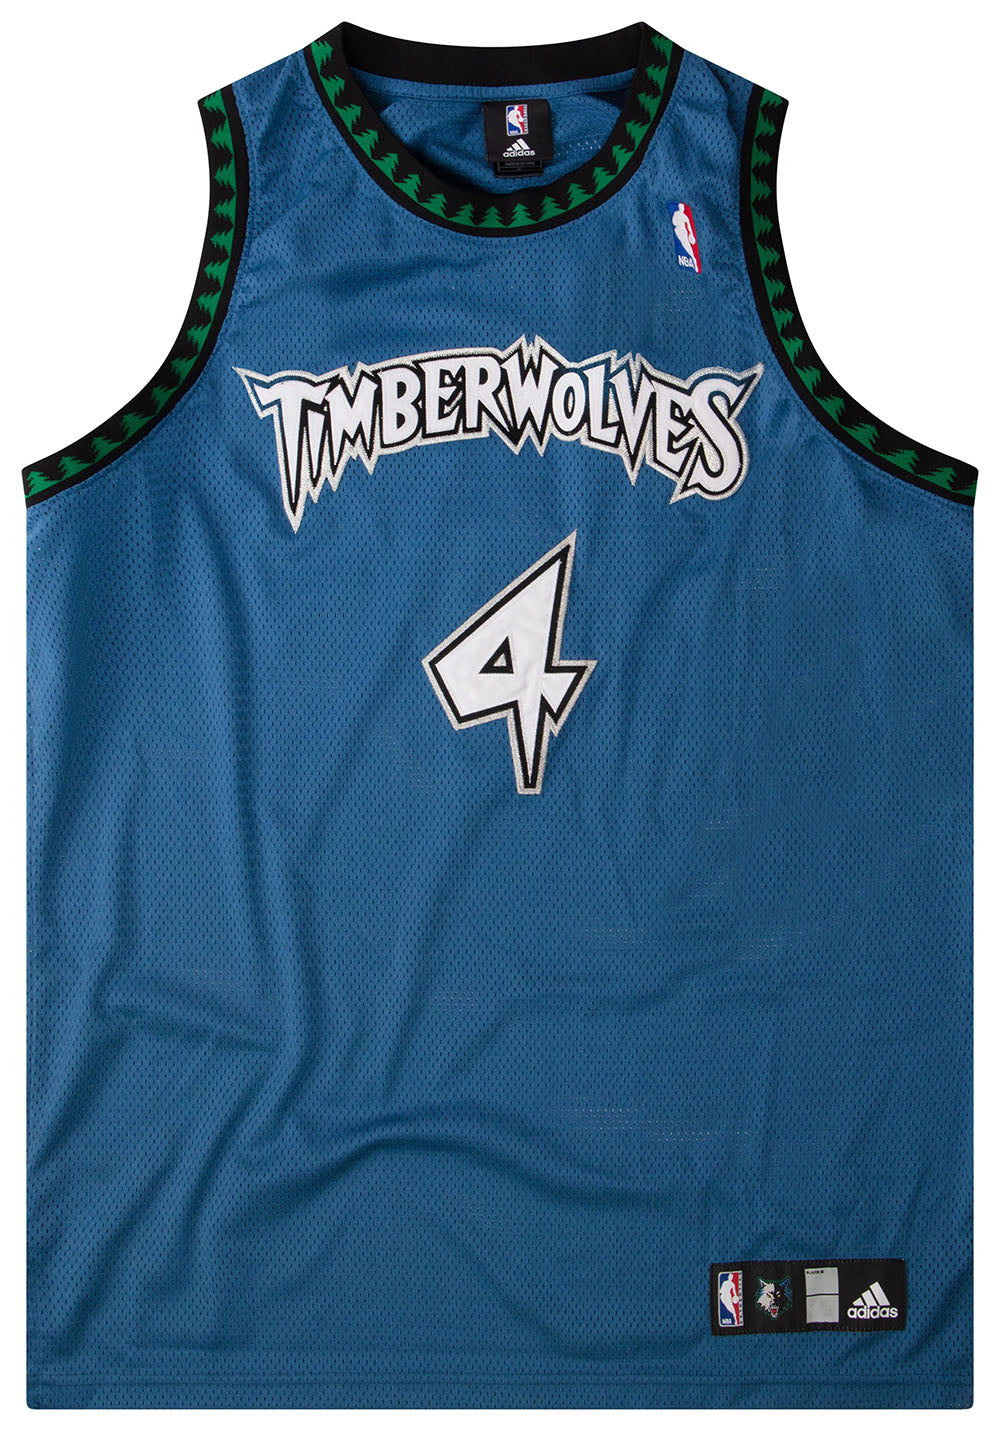 Minnesota Timberwolves basketball practice jersey #44